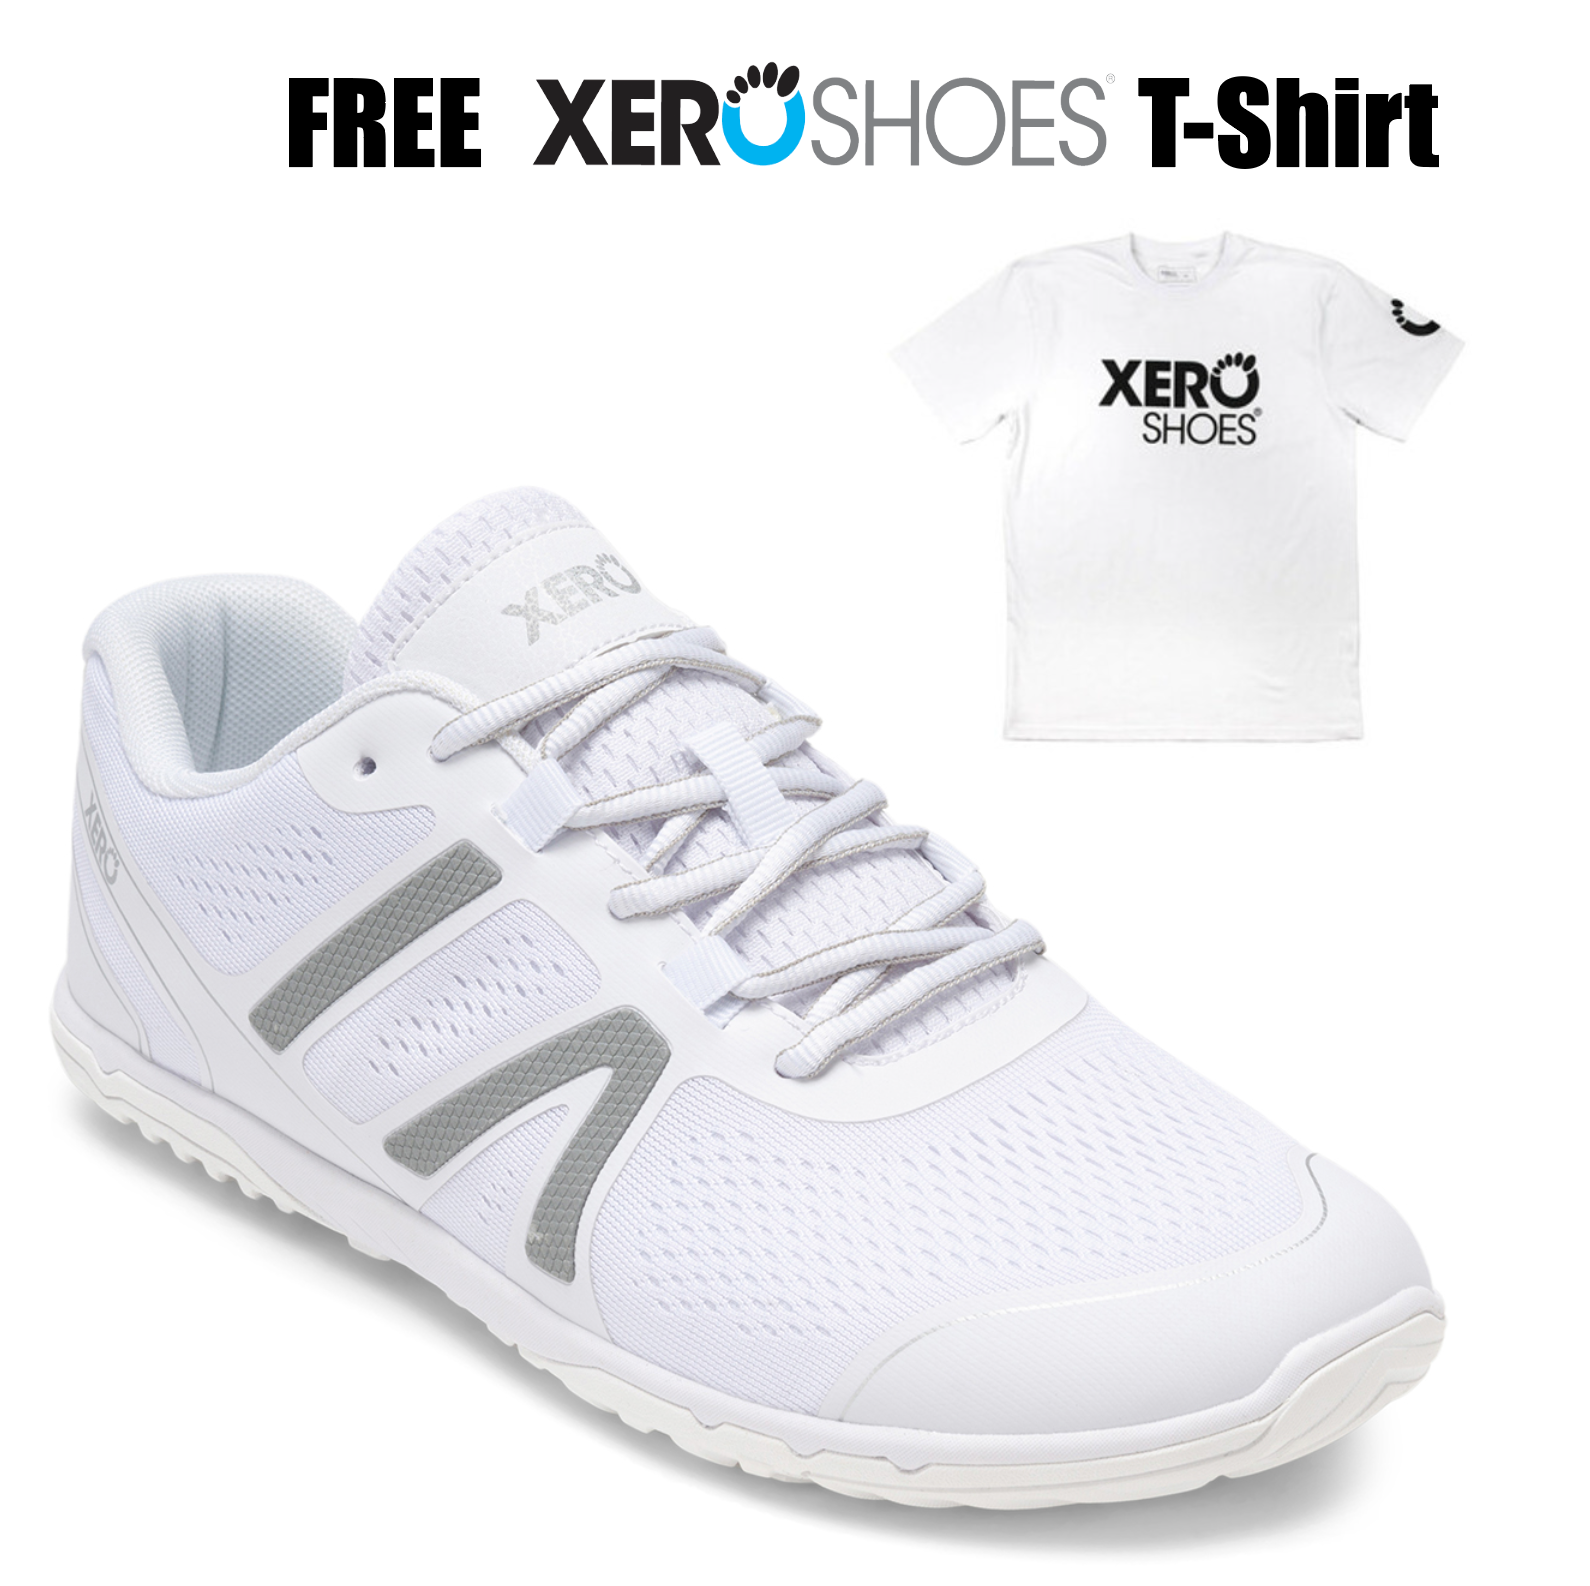 Xero HFS 2 Womens White barefoot shoes